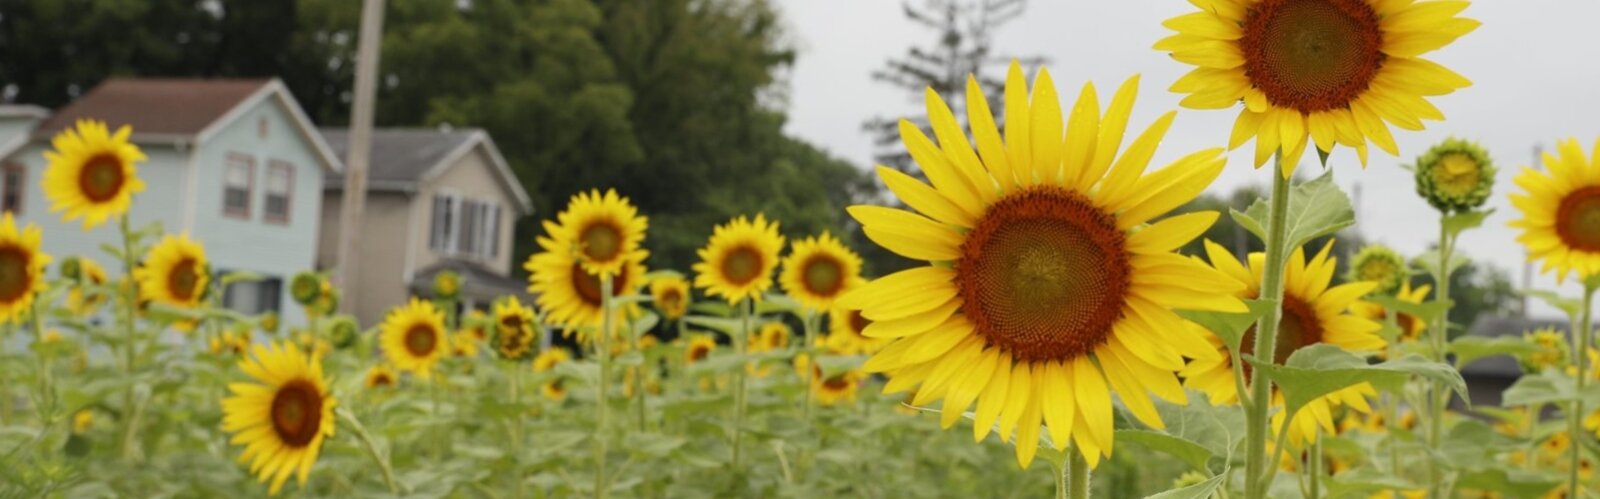 Keep Clark County Beautiful sunflower field